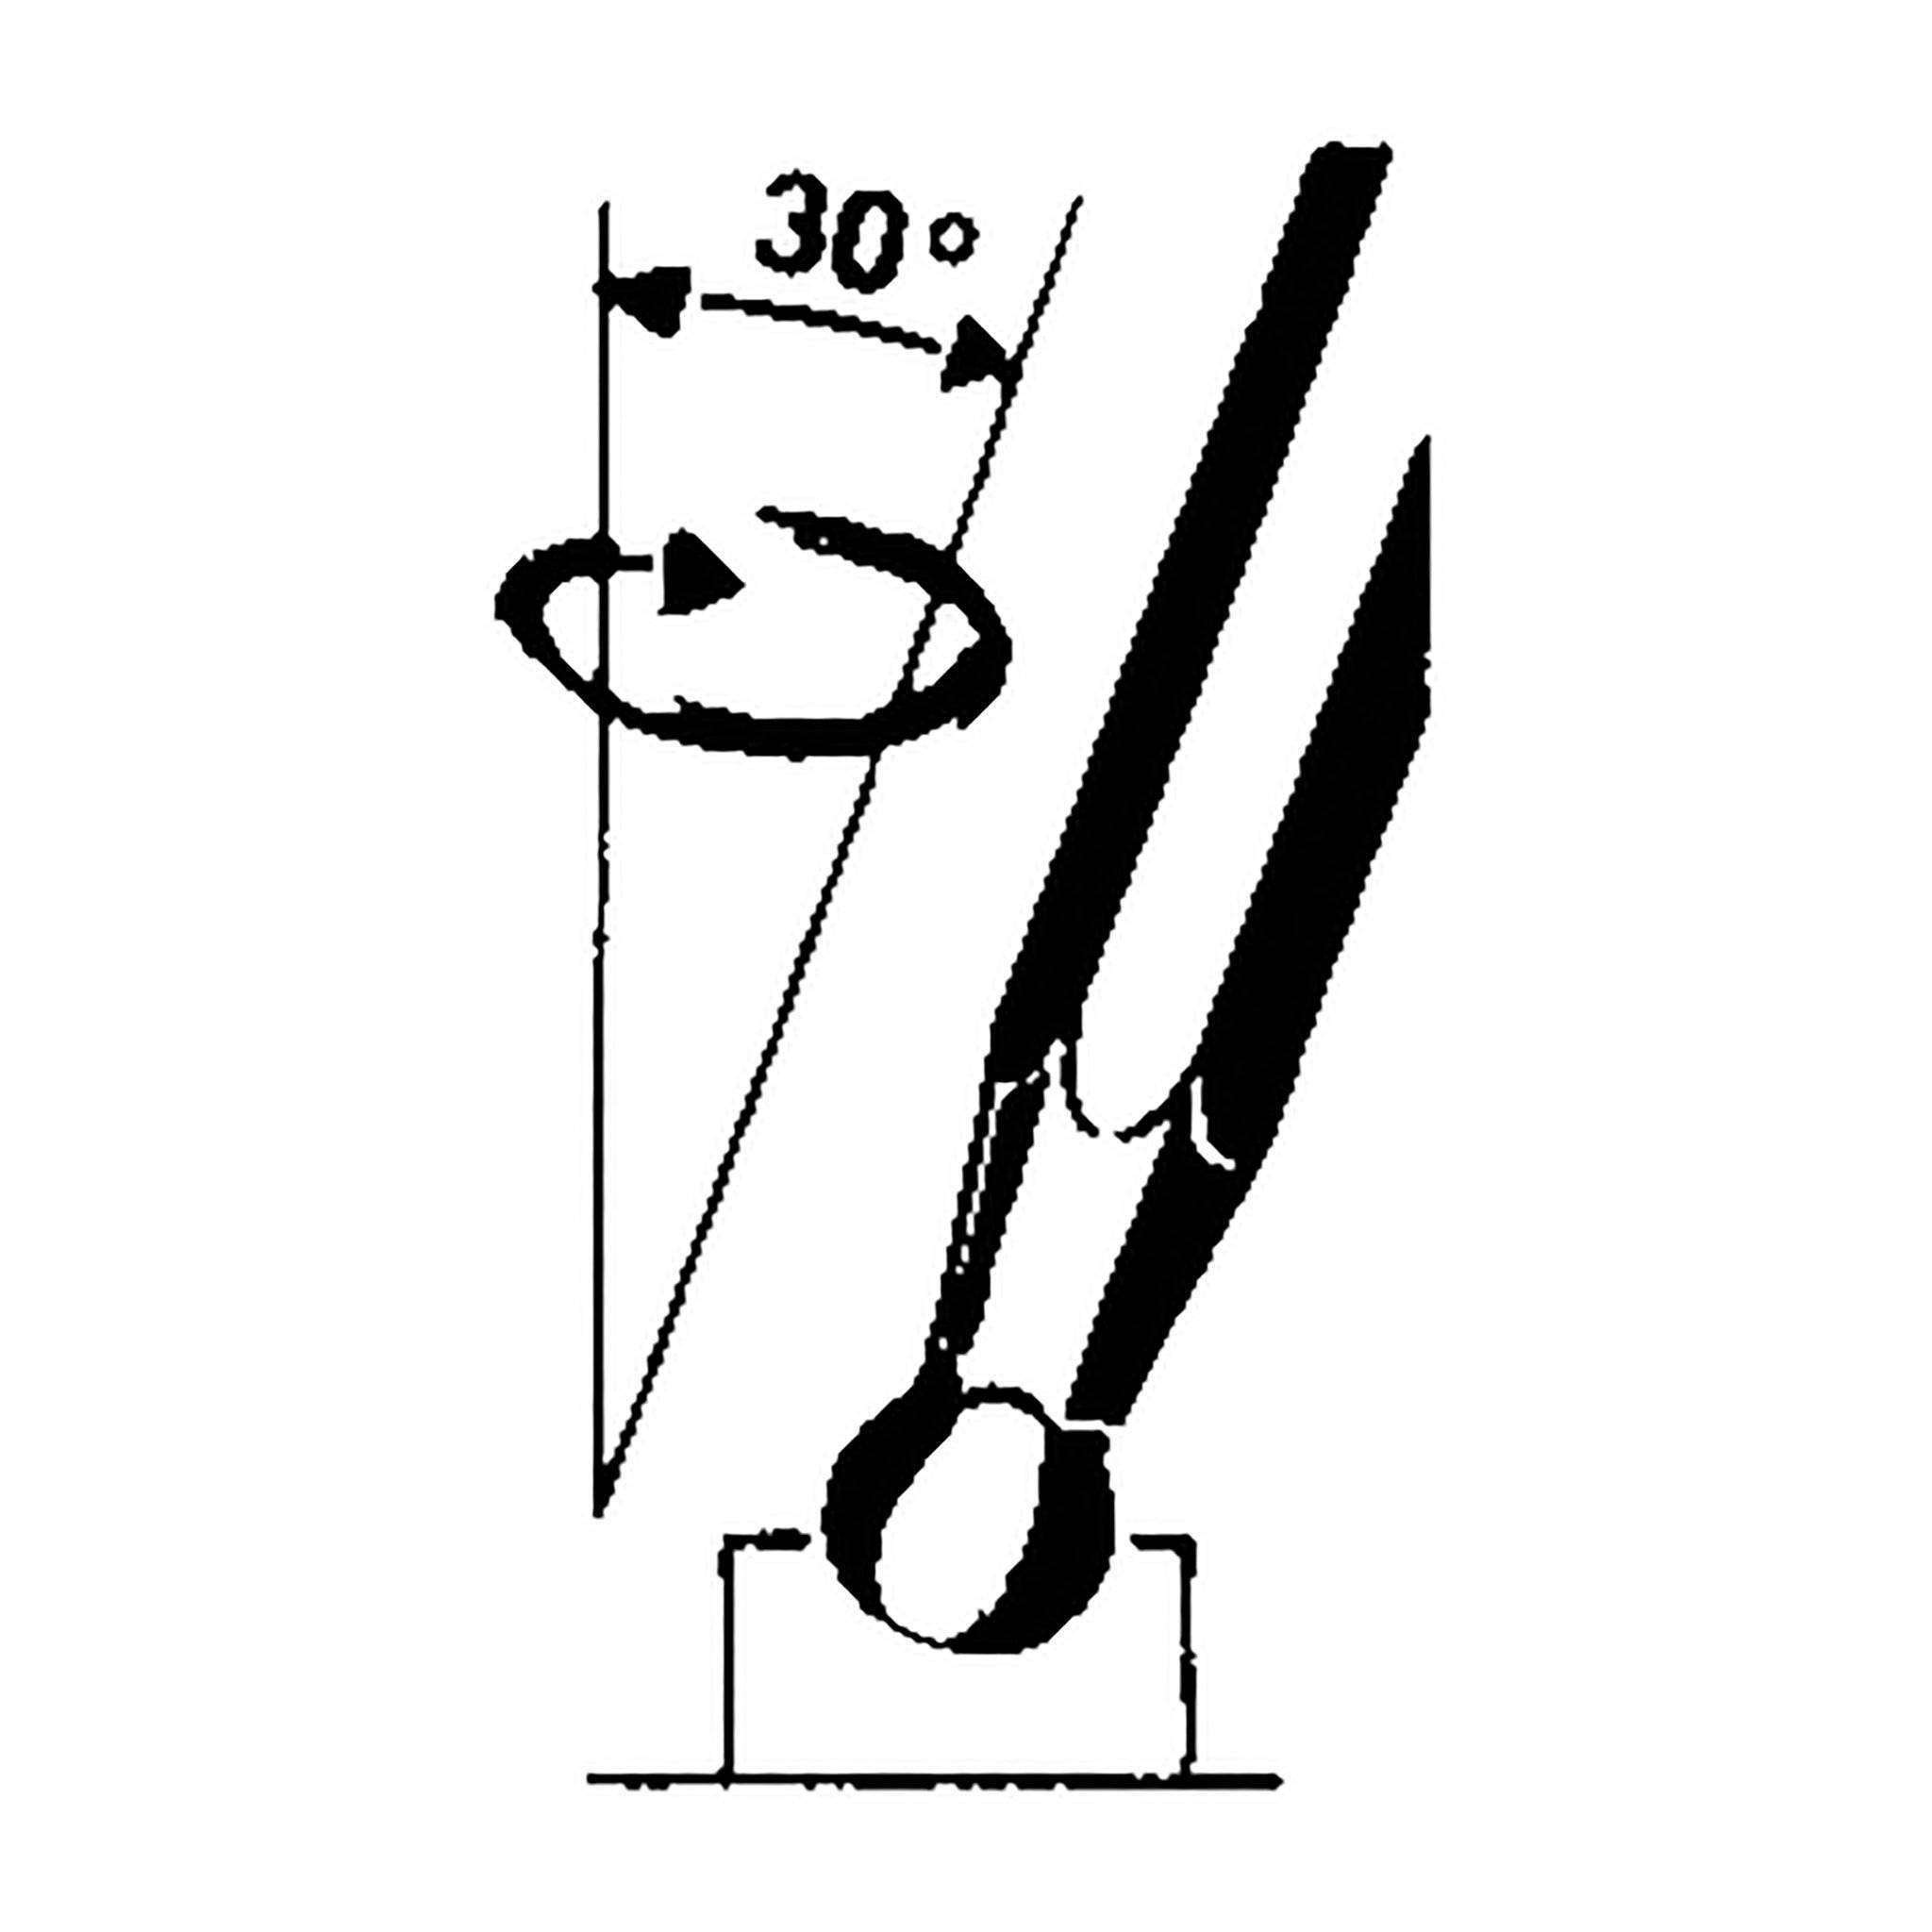 Teng Tools 7 Piece Black Metric Ball Point Hex Key / Allen Wrench Set (2.5mm - 10mm) - 1475